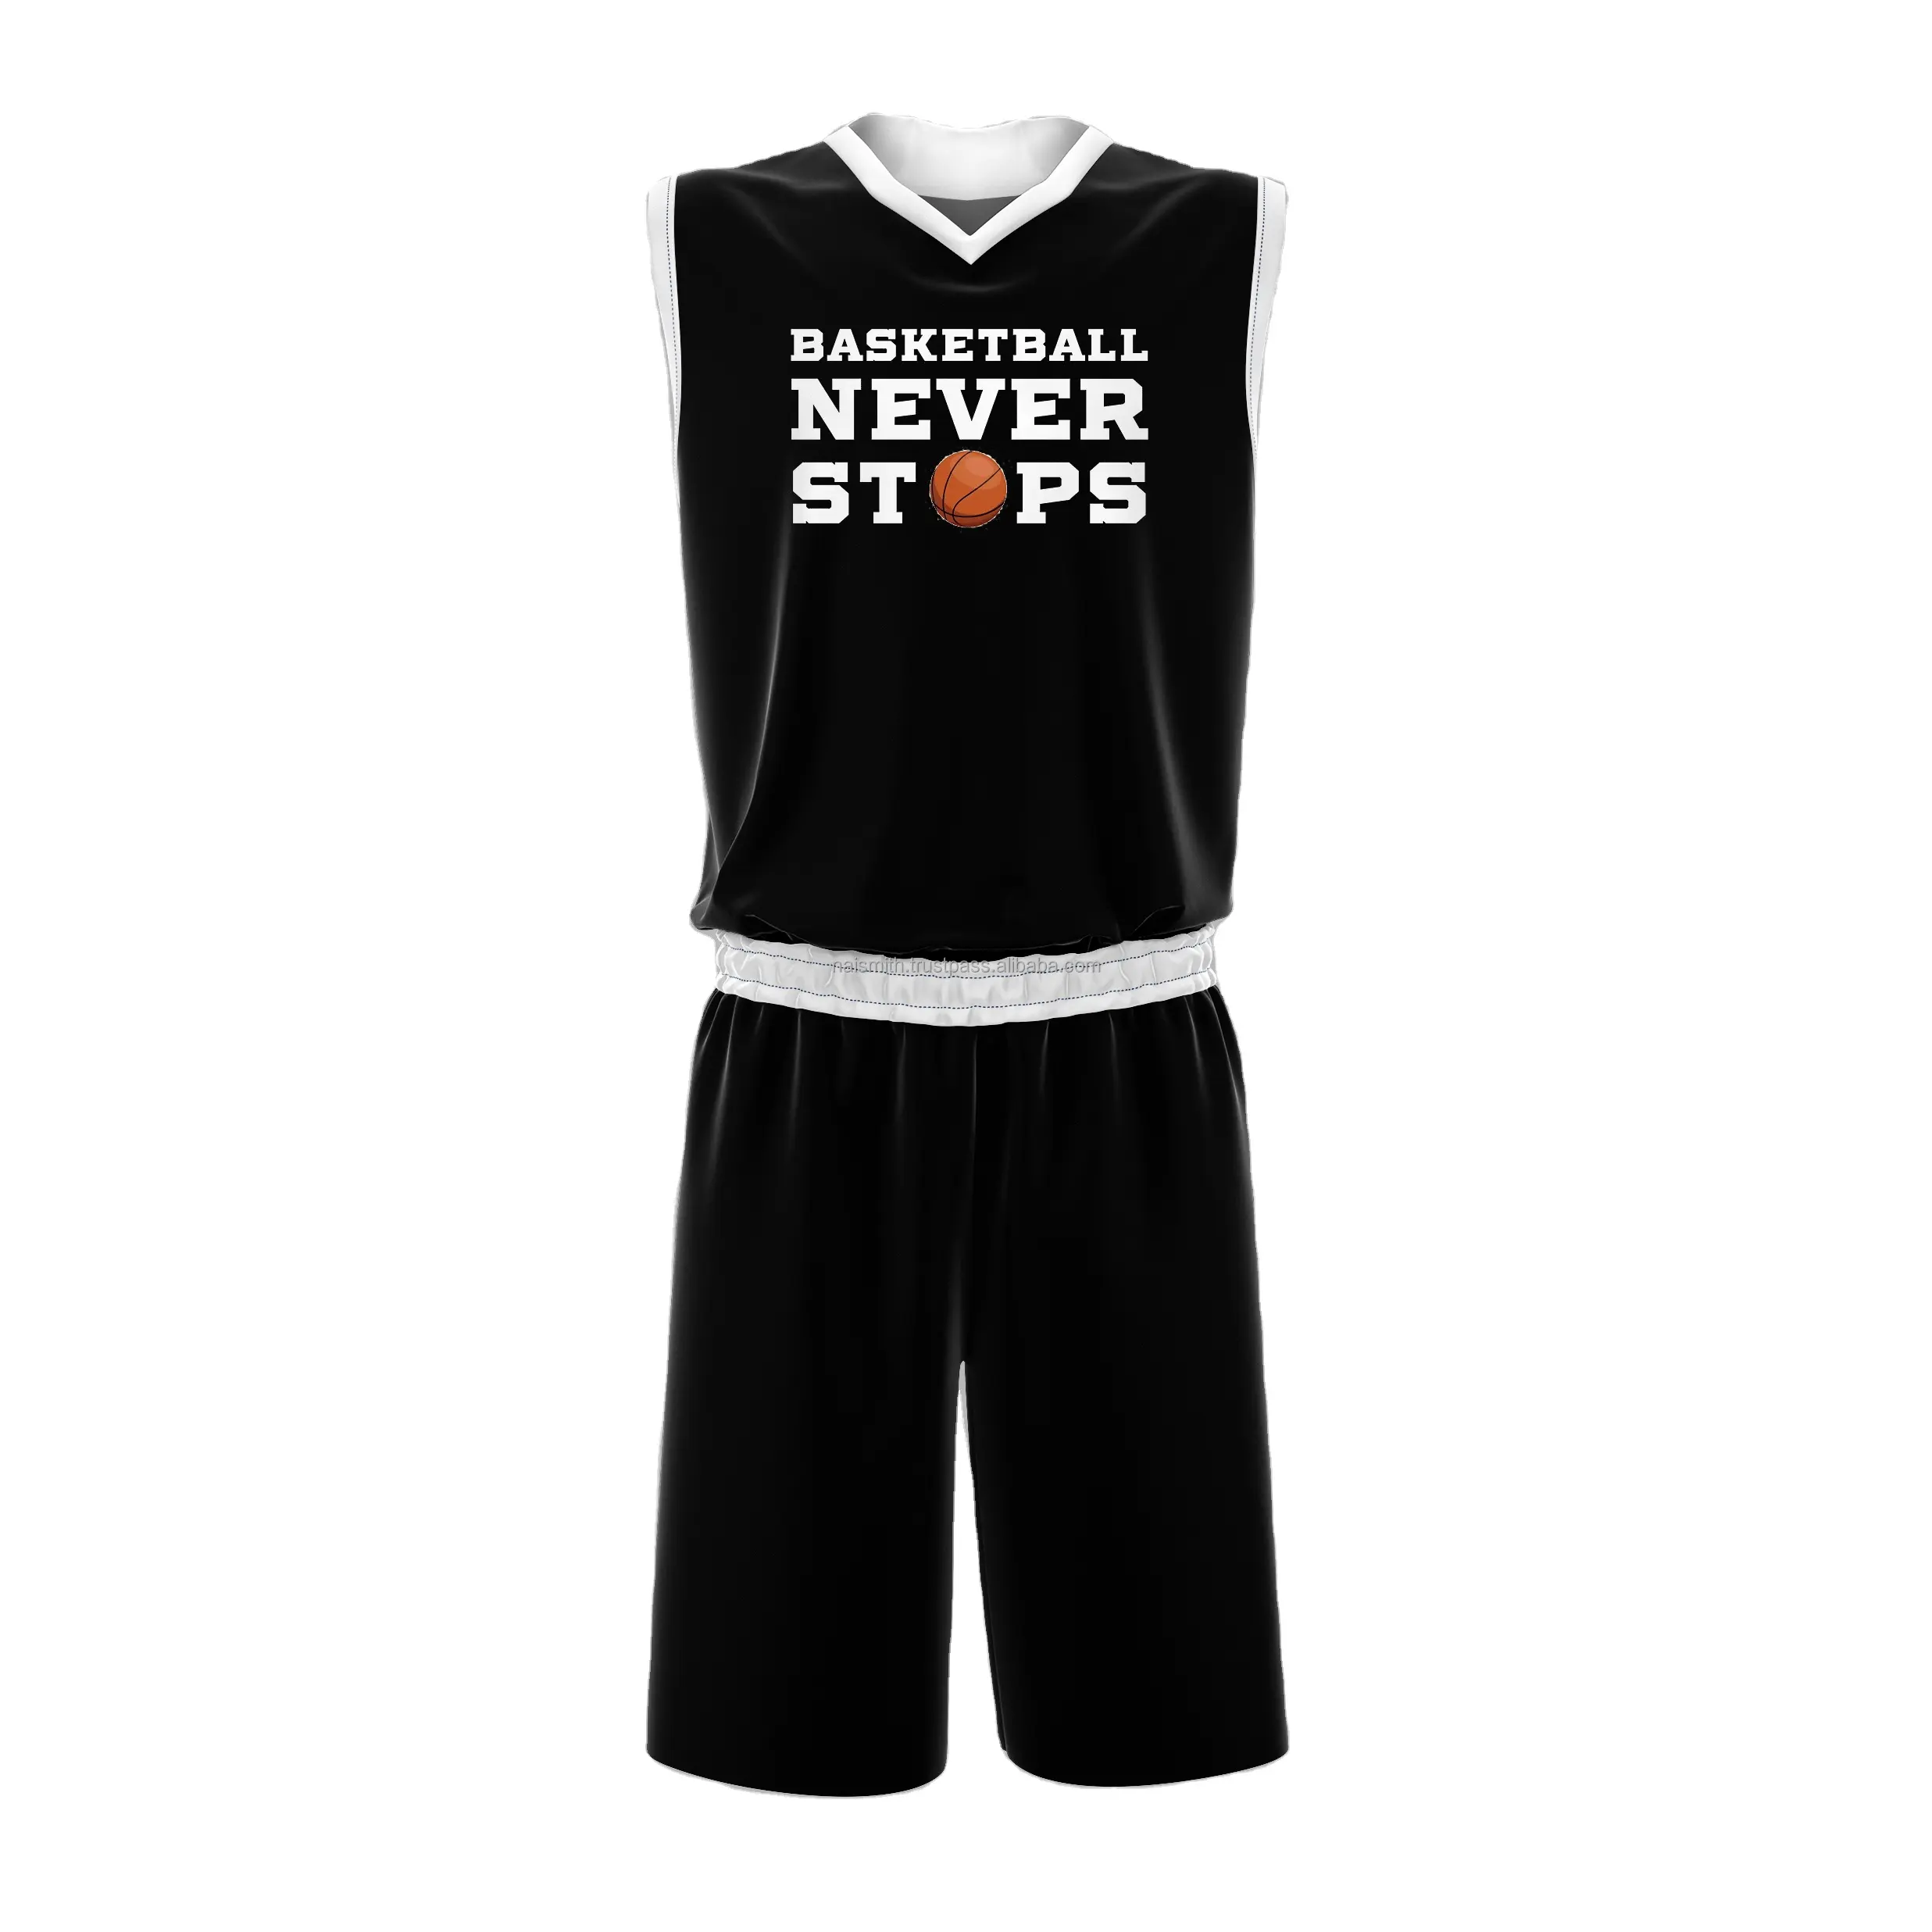 Kunden spezifische und sublimierte Basketball uniform Private Label Basketball uniform Trikot